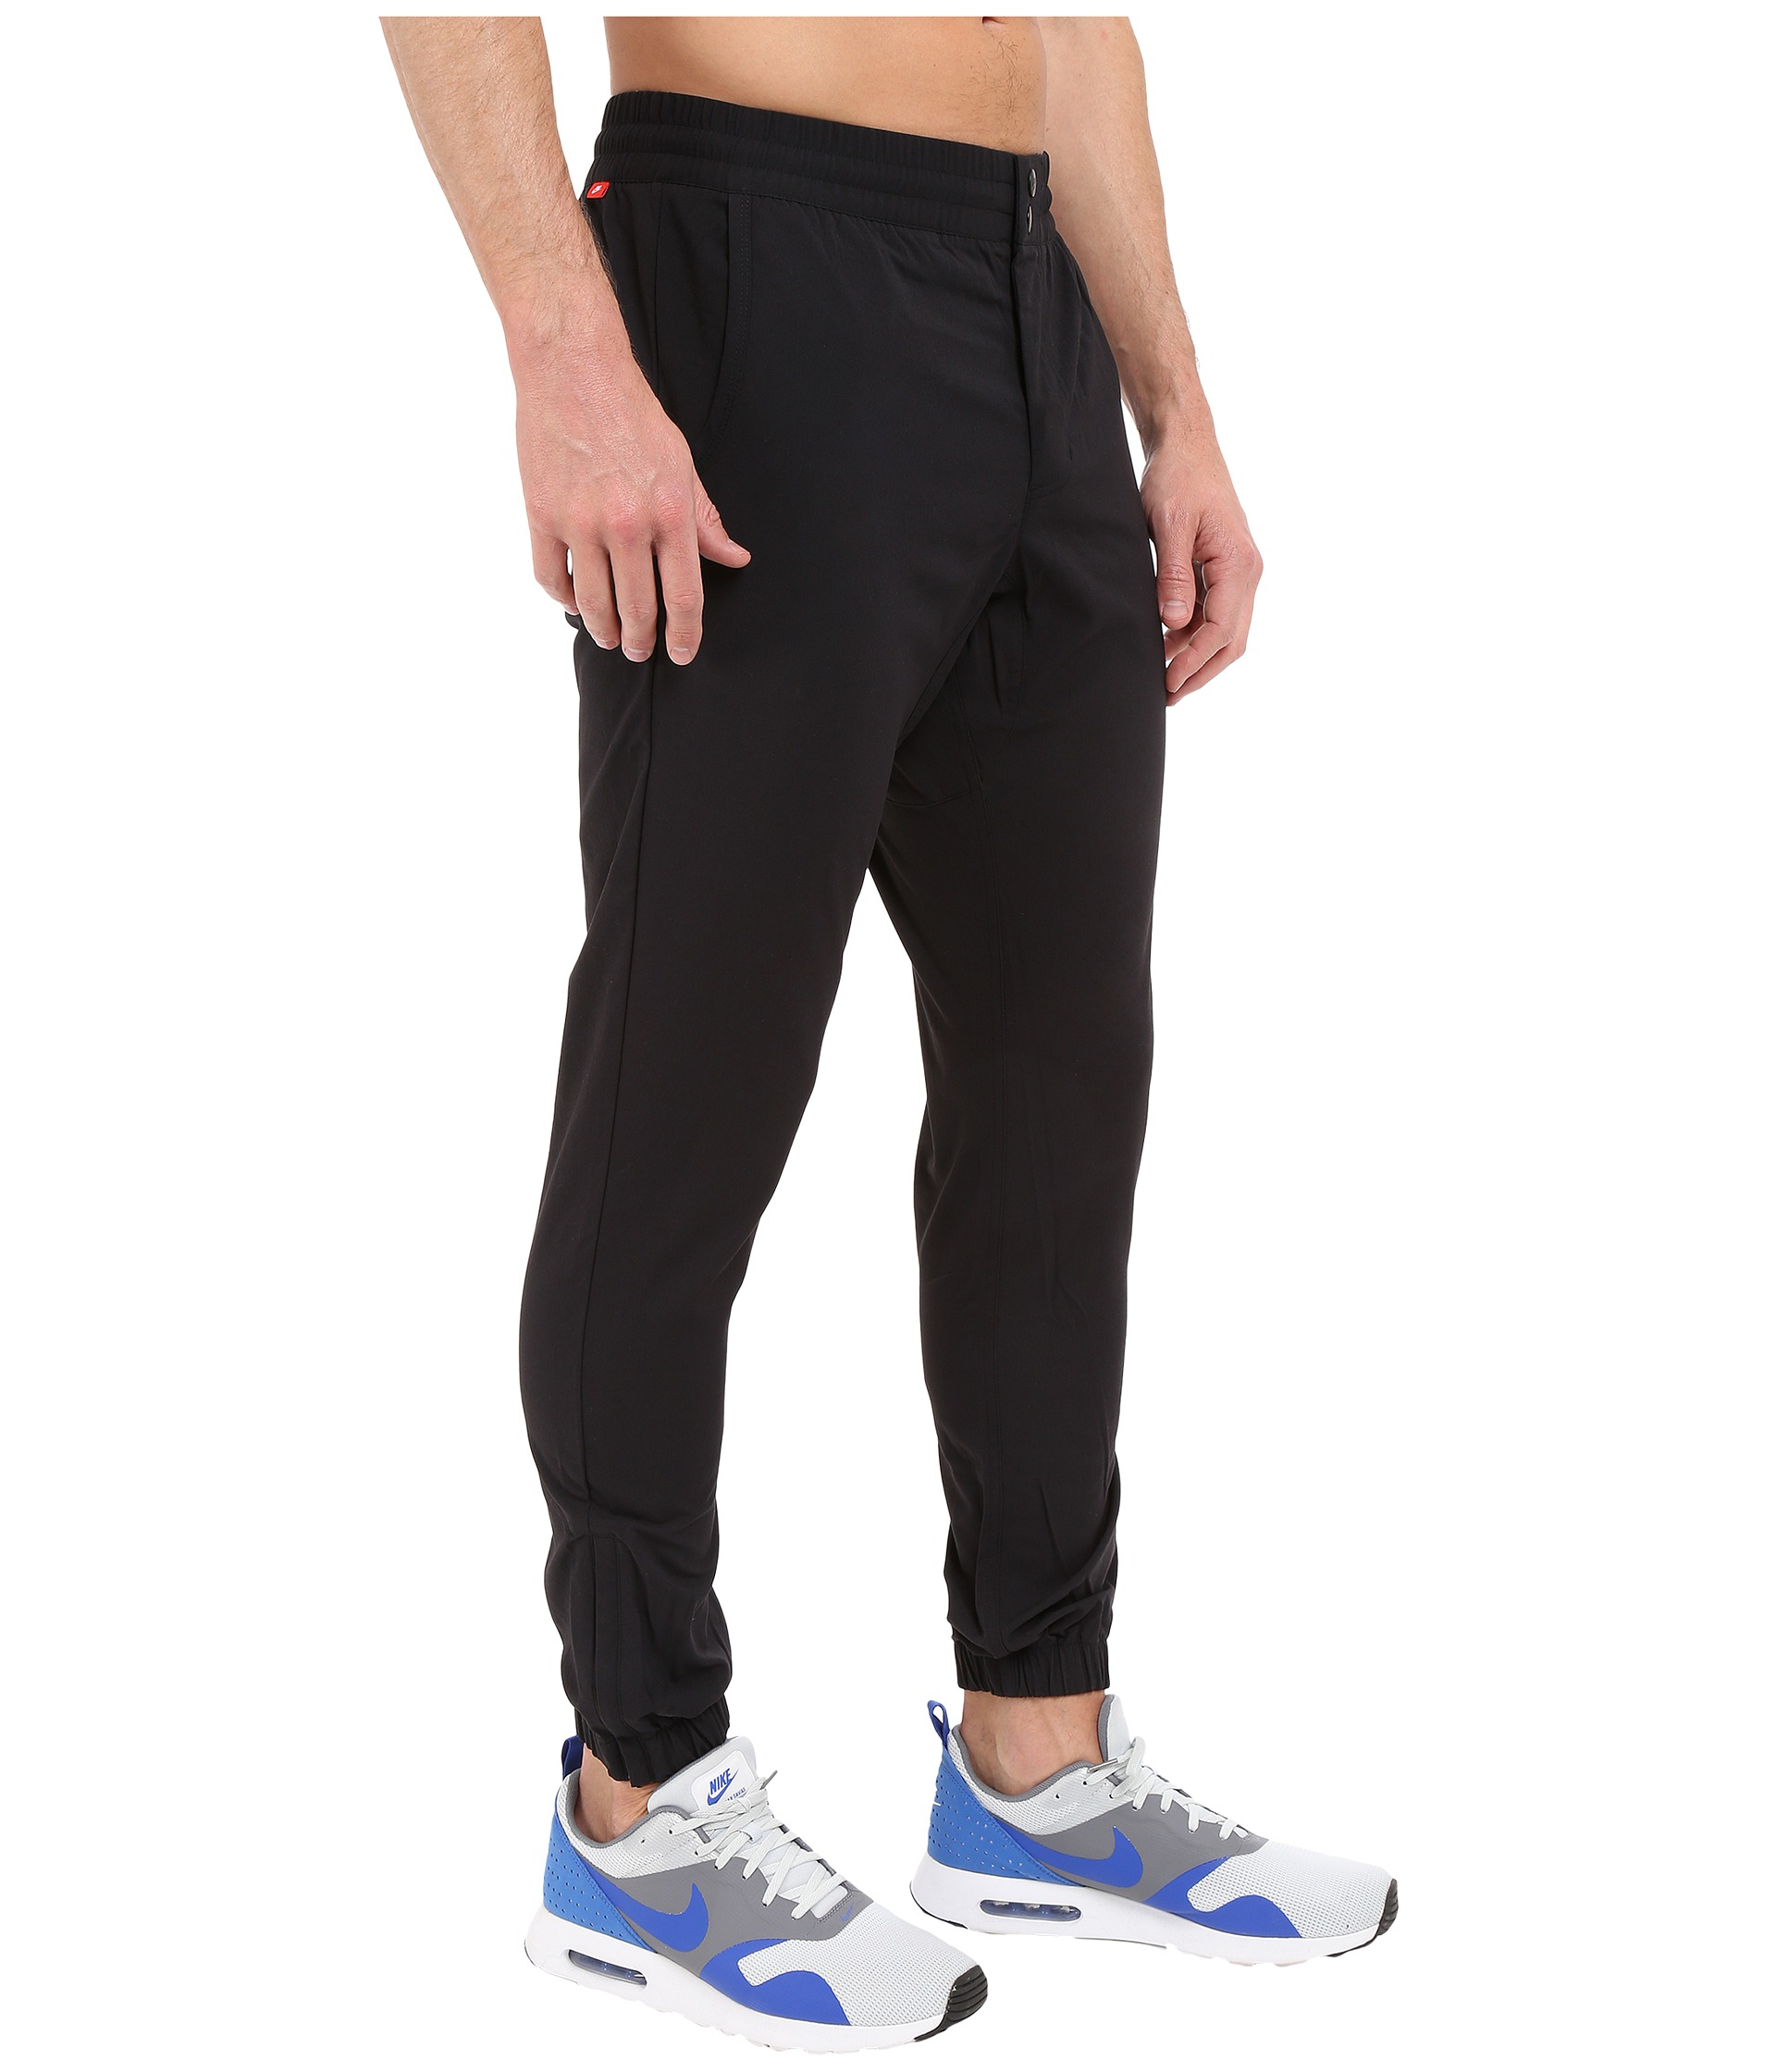 Nike Synthetic V442 Woven Pants in Black for Men - Lyst